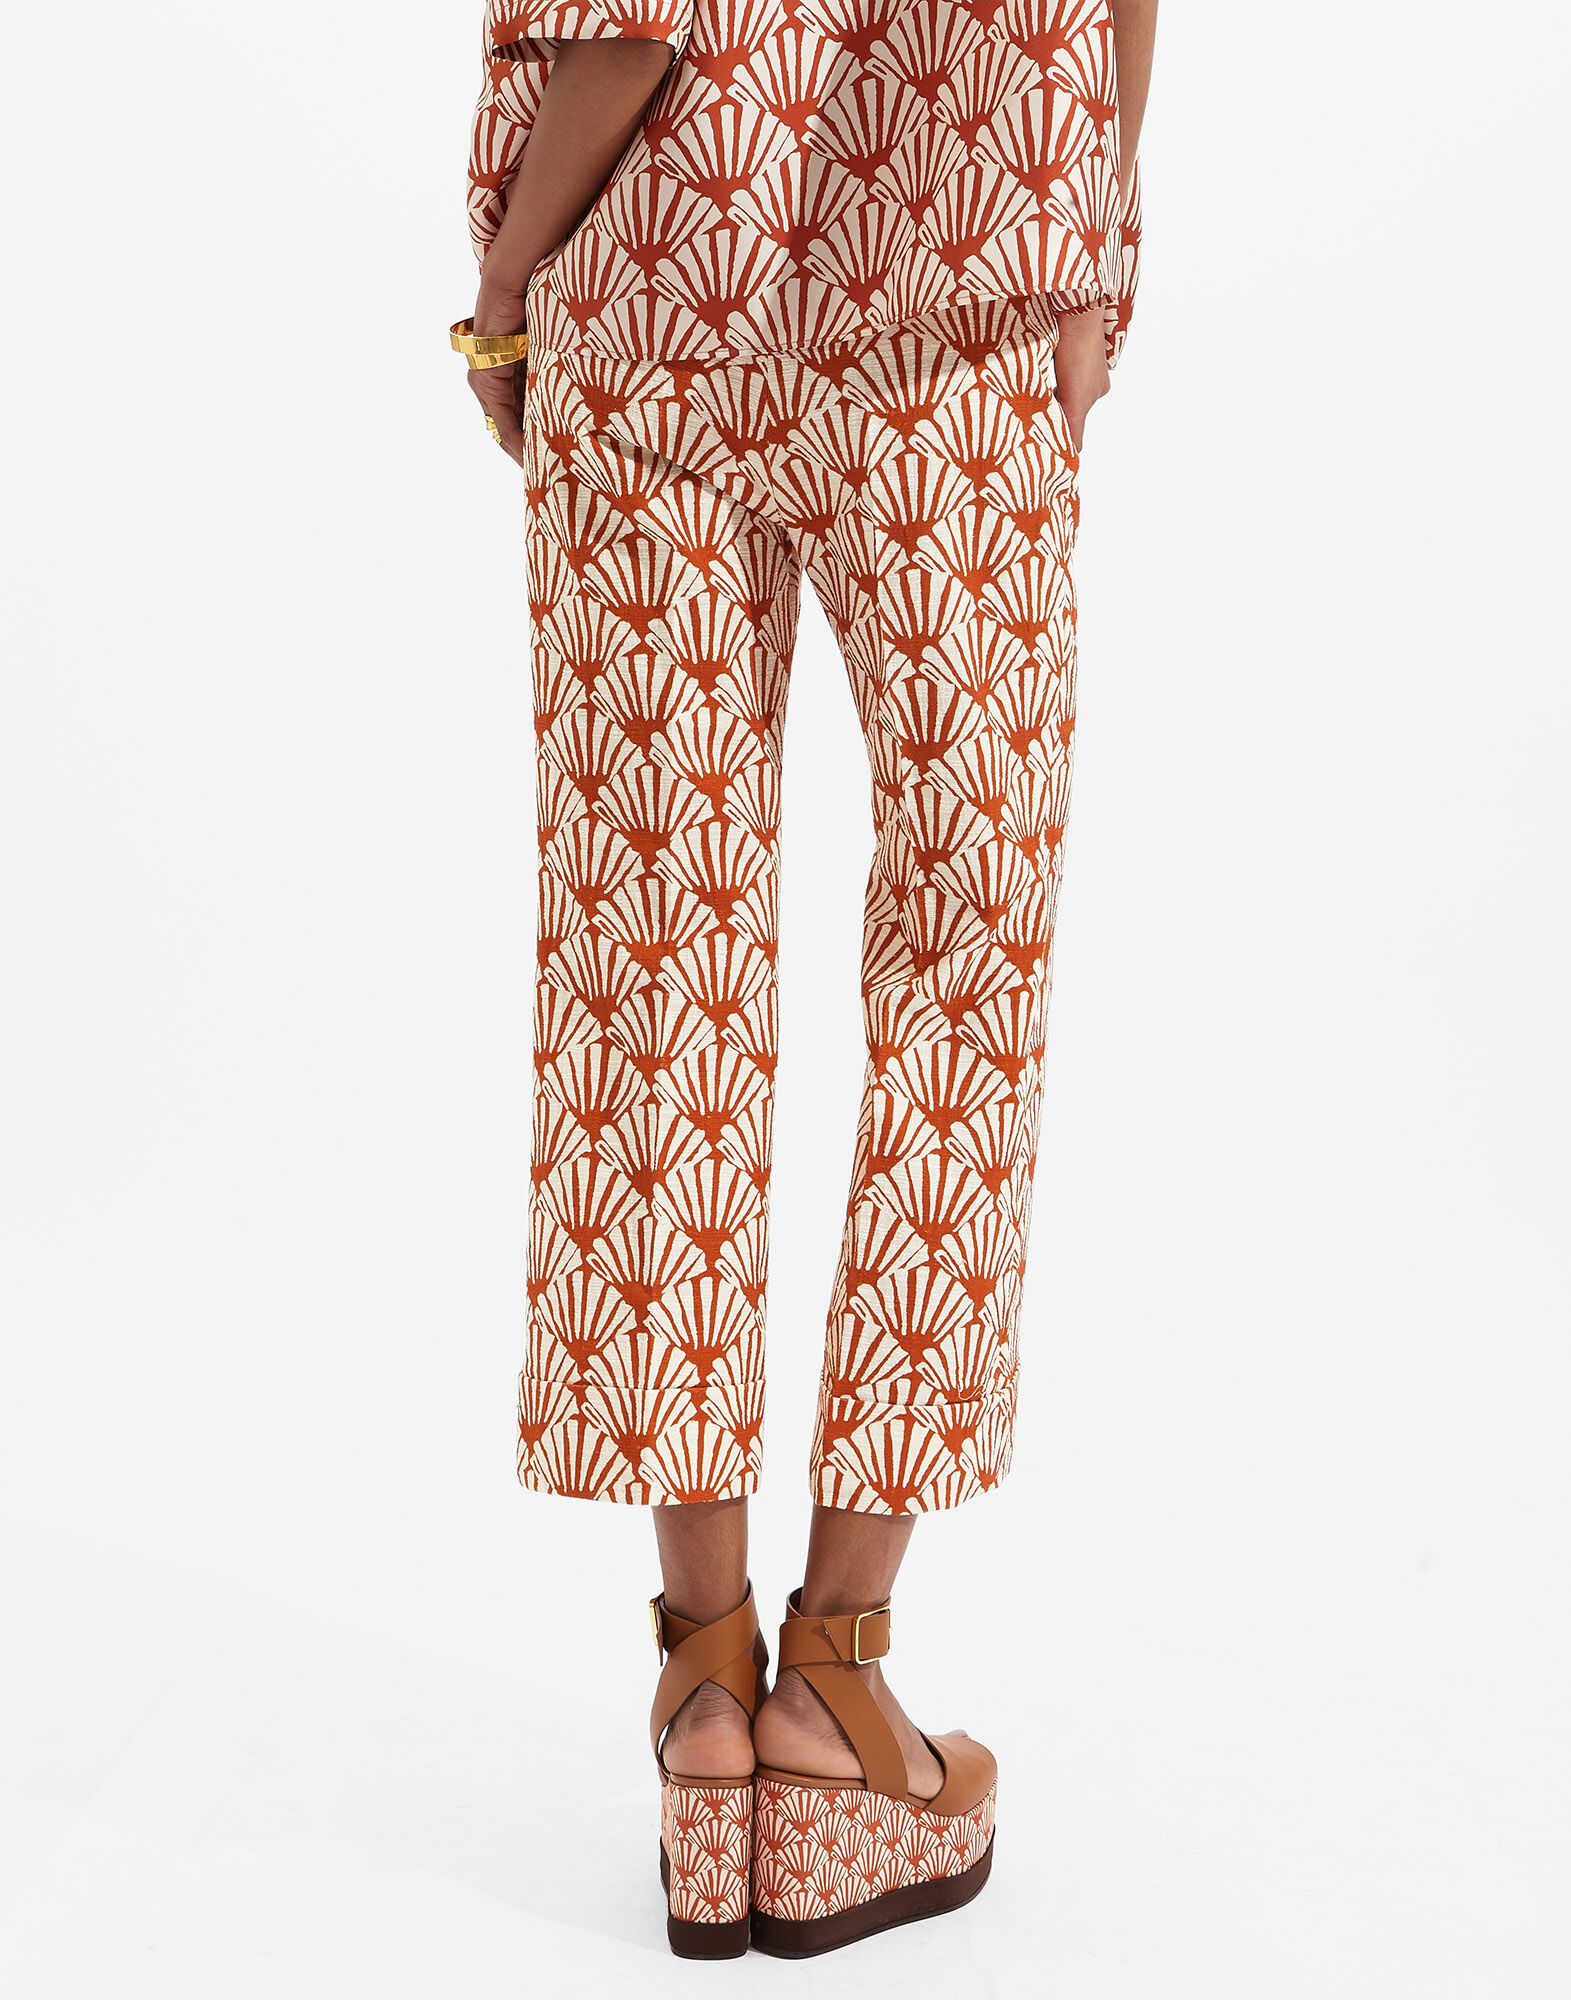 Womens Plaid Lounge Wear Pants Wide Leg Soft Stretch Pajama Sleep Trousers  US ; | eBay